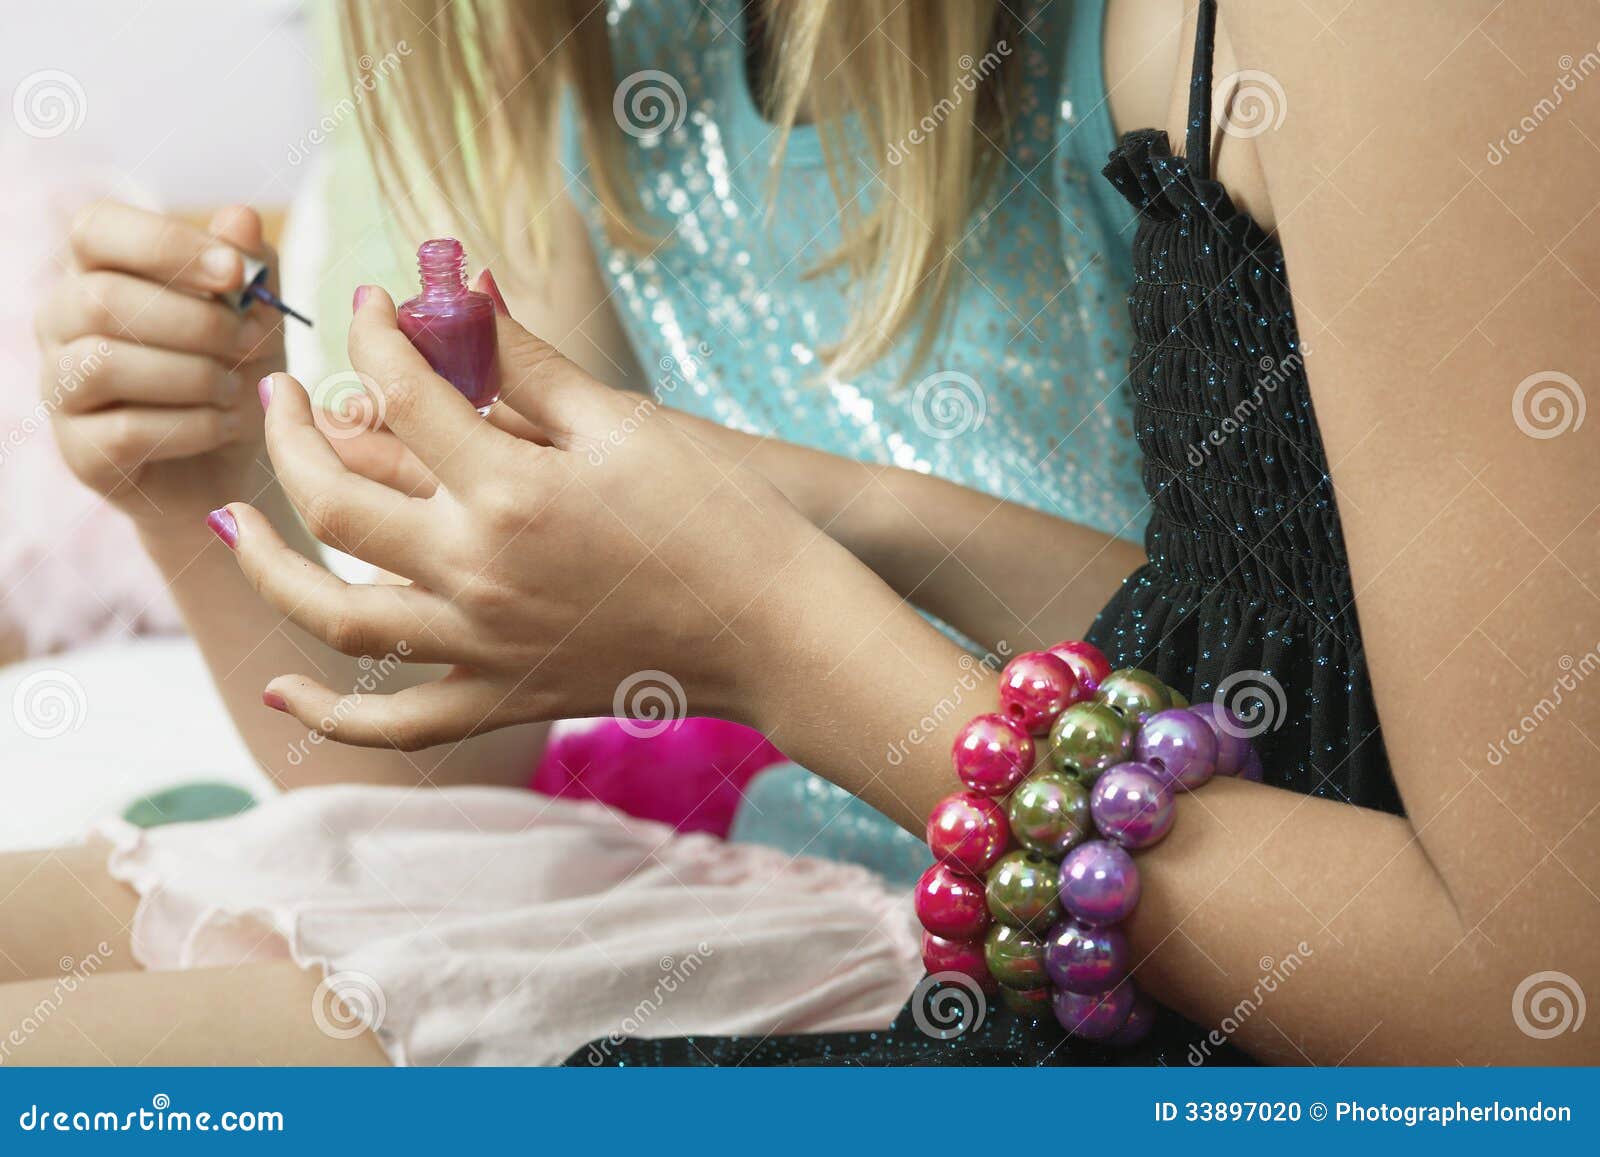 girl applying nail polish to friend's fingernails